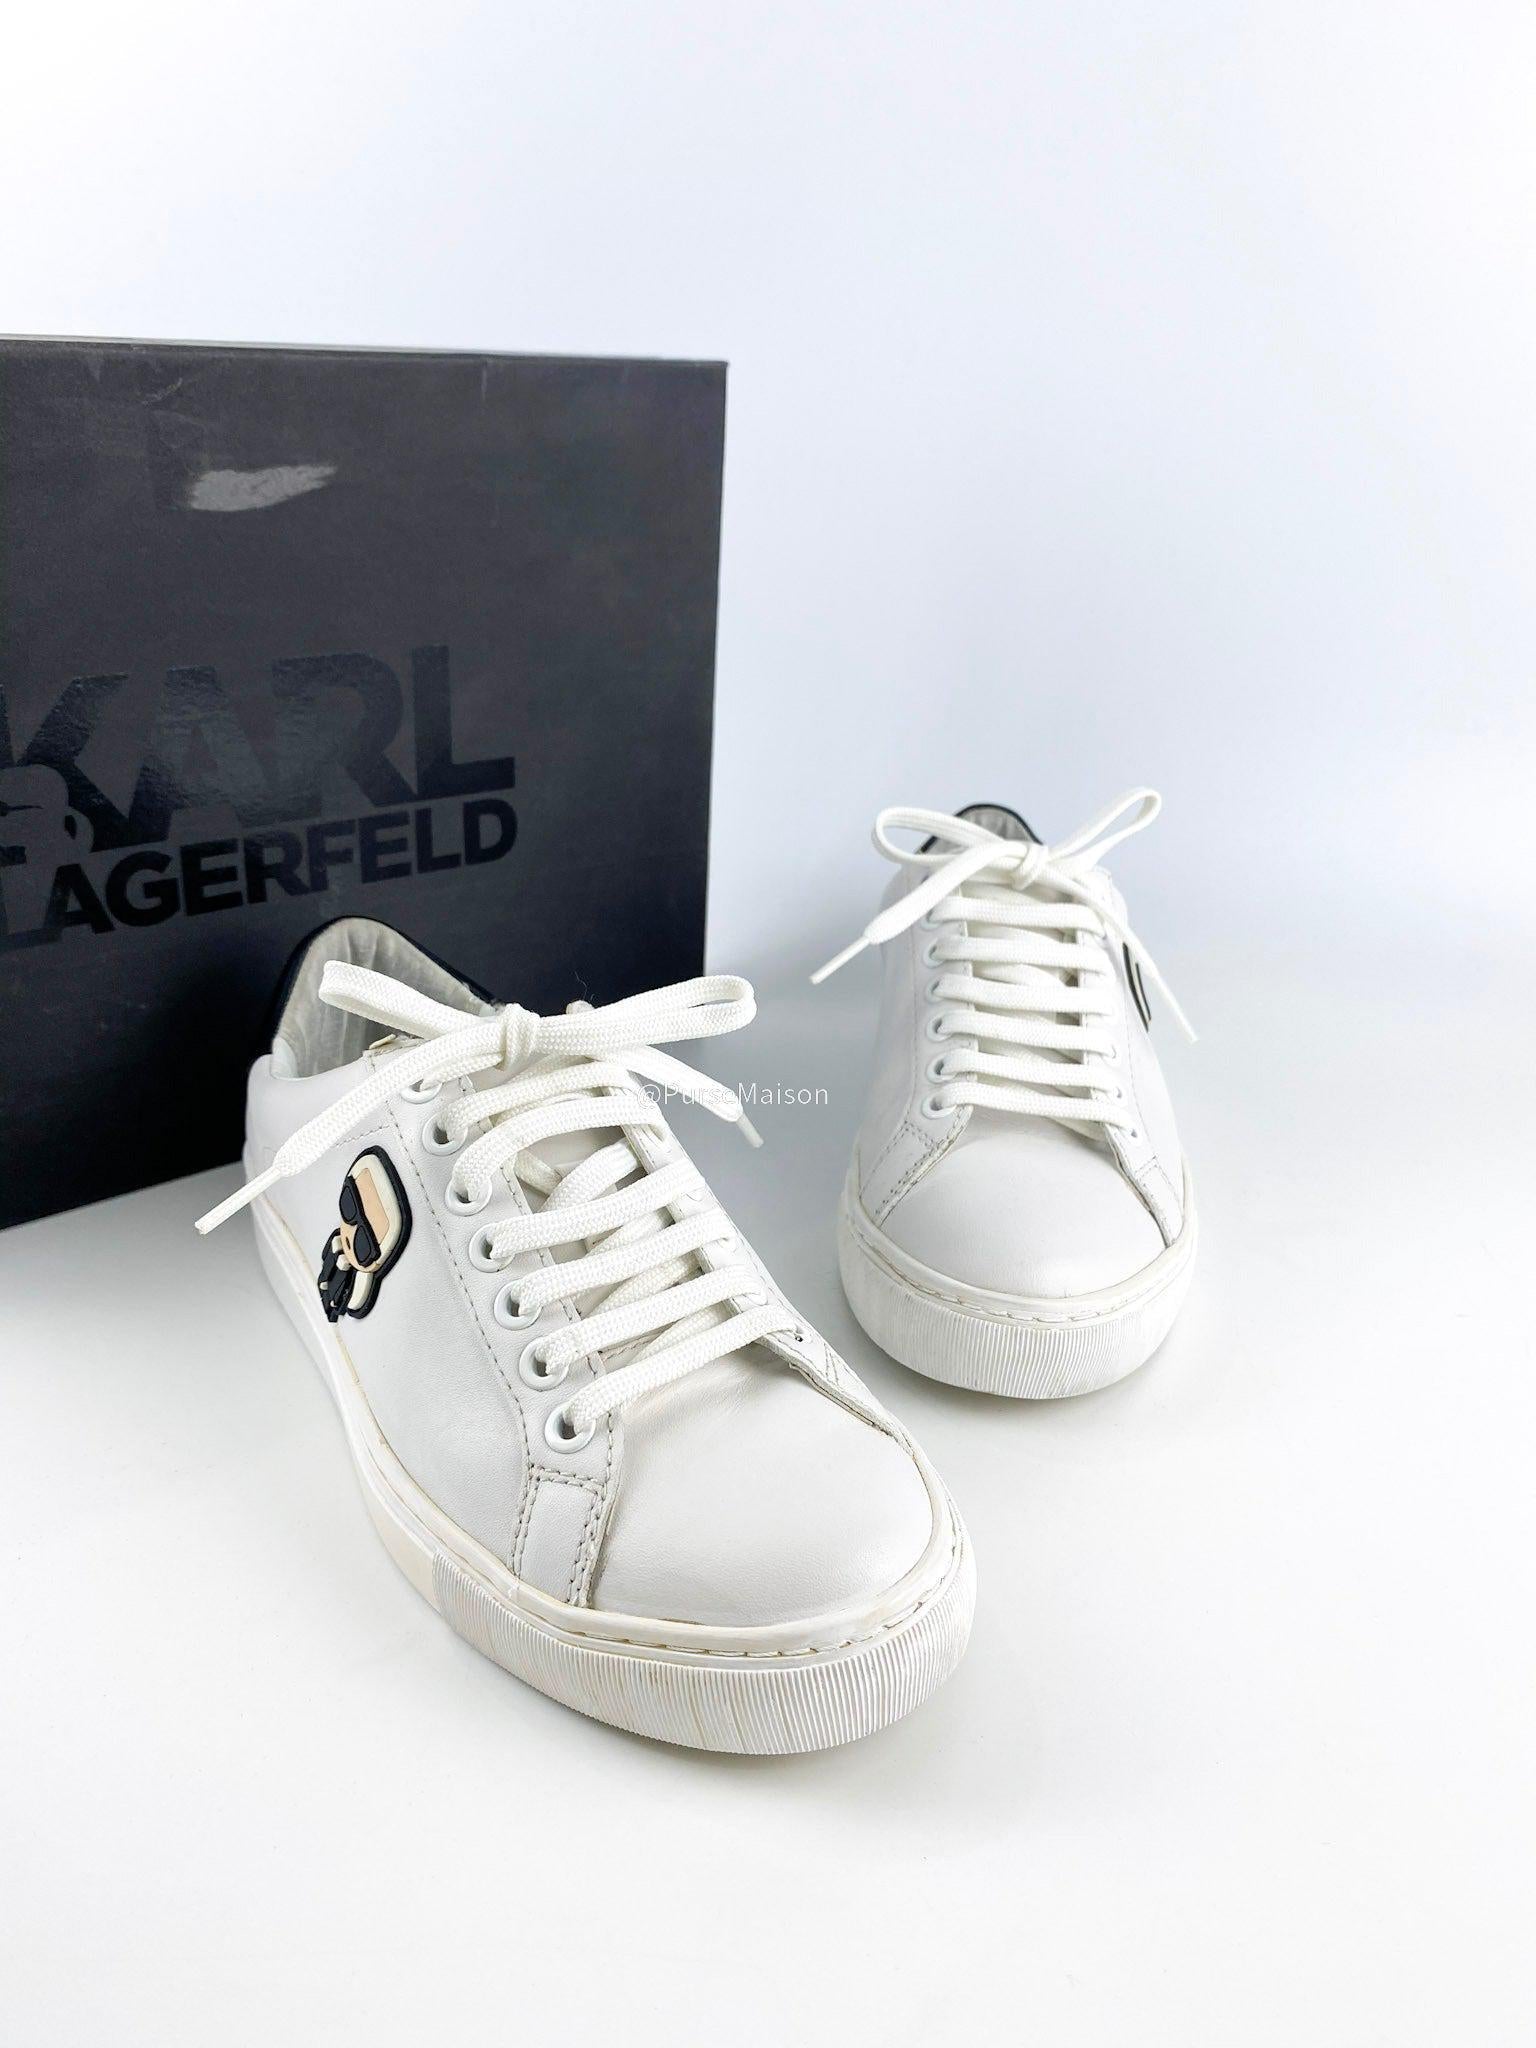 Karl Lagerfeld Ikonik Lo Lace White Sneakers Size 37 EUR (24.5 cm)